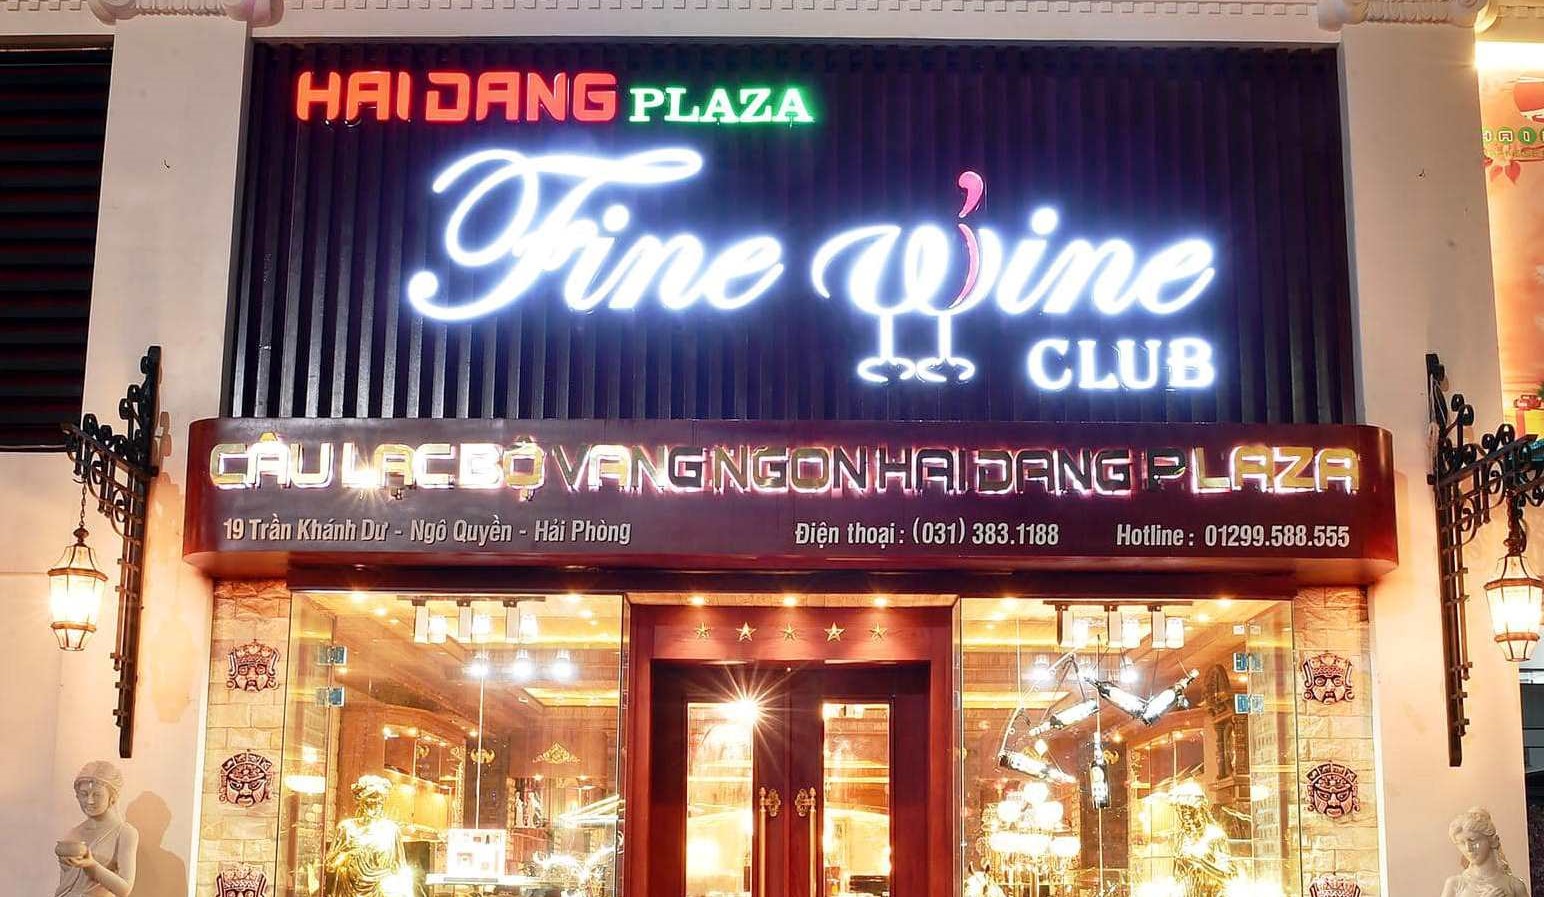 Fine Wine Club
19 Tran Khanh Du, Ngo Quyen, Hai Phong
(+84)88.959.1818 - (+84)829.588.555
marketing@haidangplaza.vn@gmail.com
